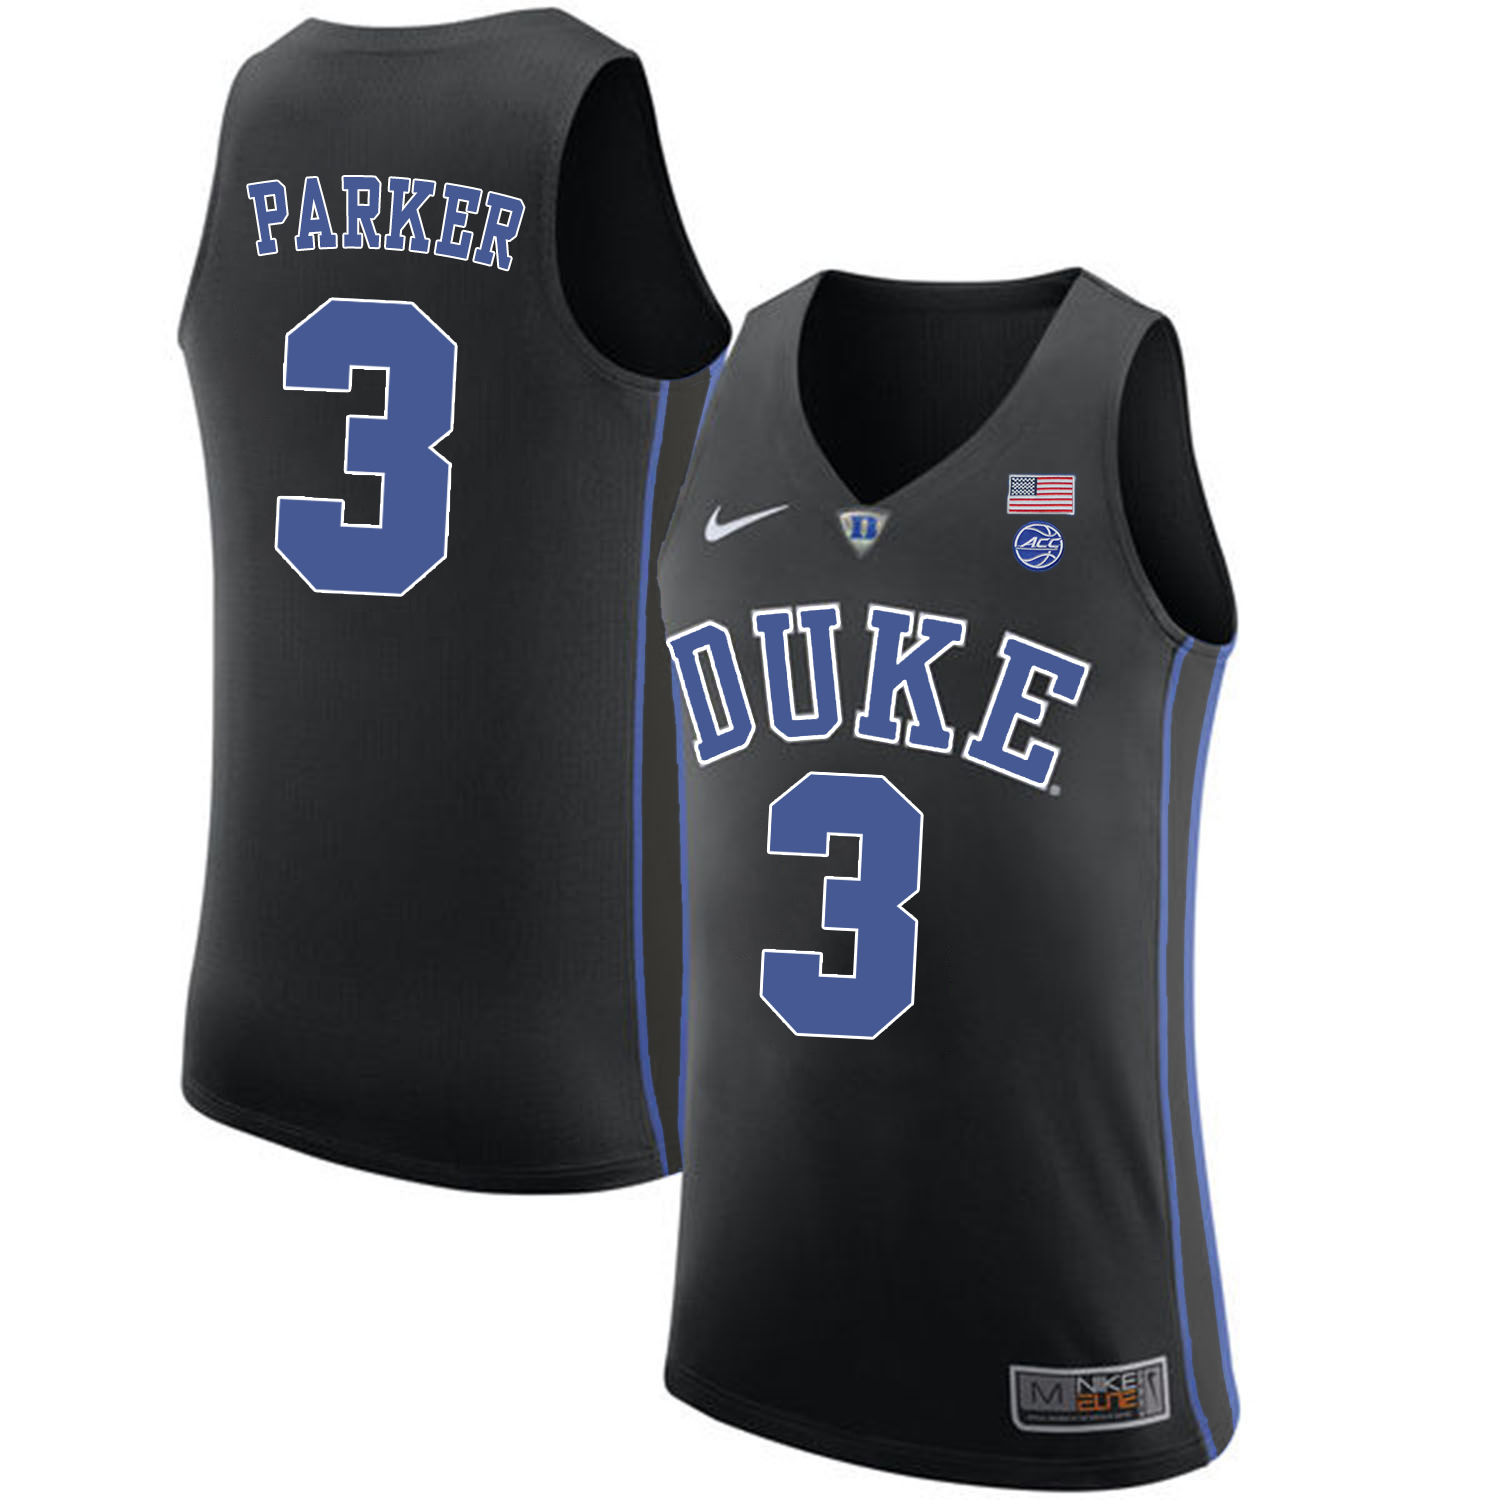 Duke Blue Devils 3 Jabari Parker Black College Basketball Jersey